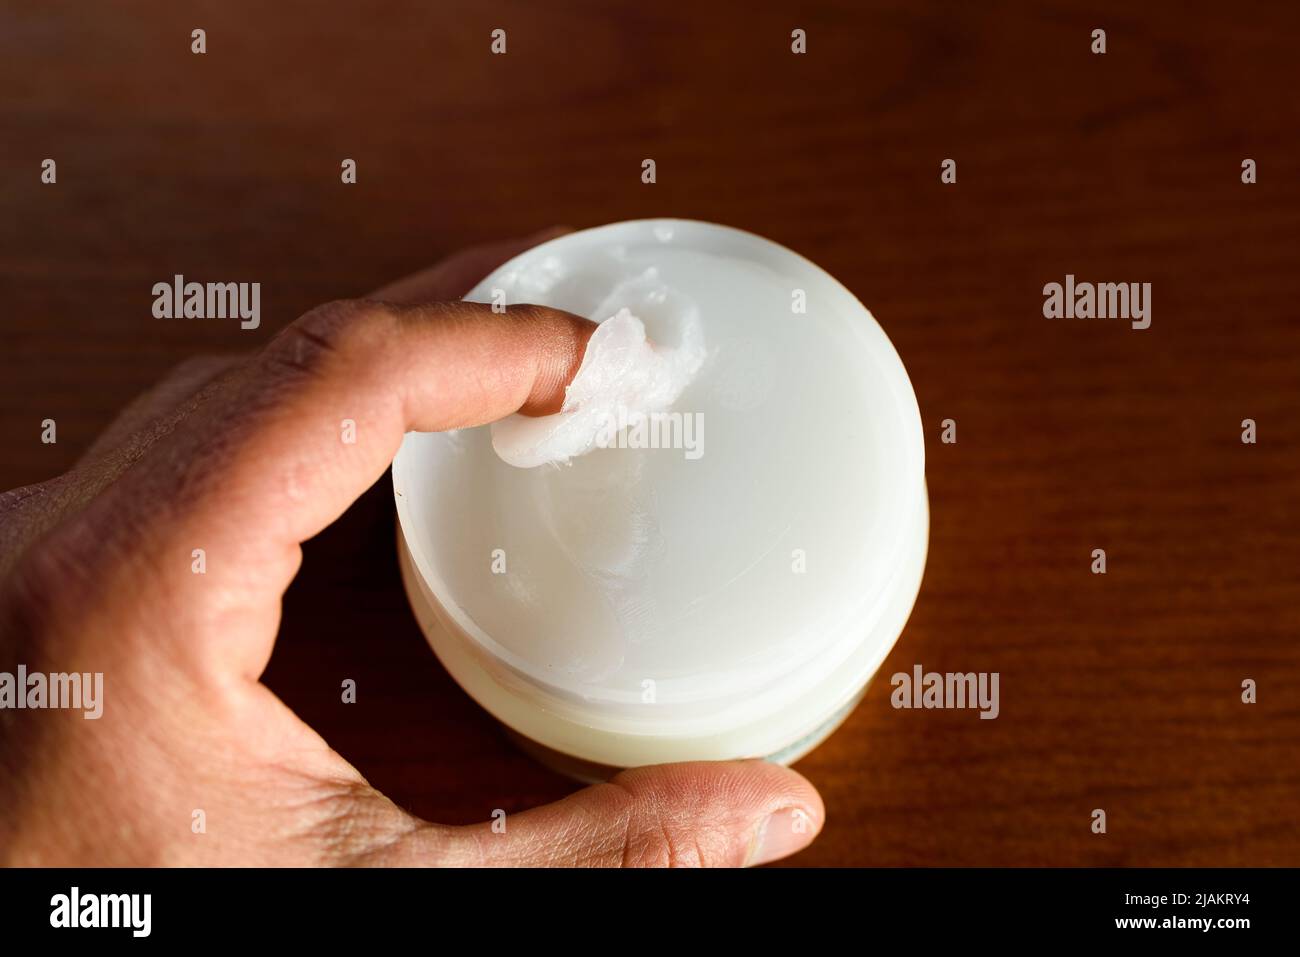 A man picks up white Vaseline to moisturize his skin, dark background. Stock Photo